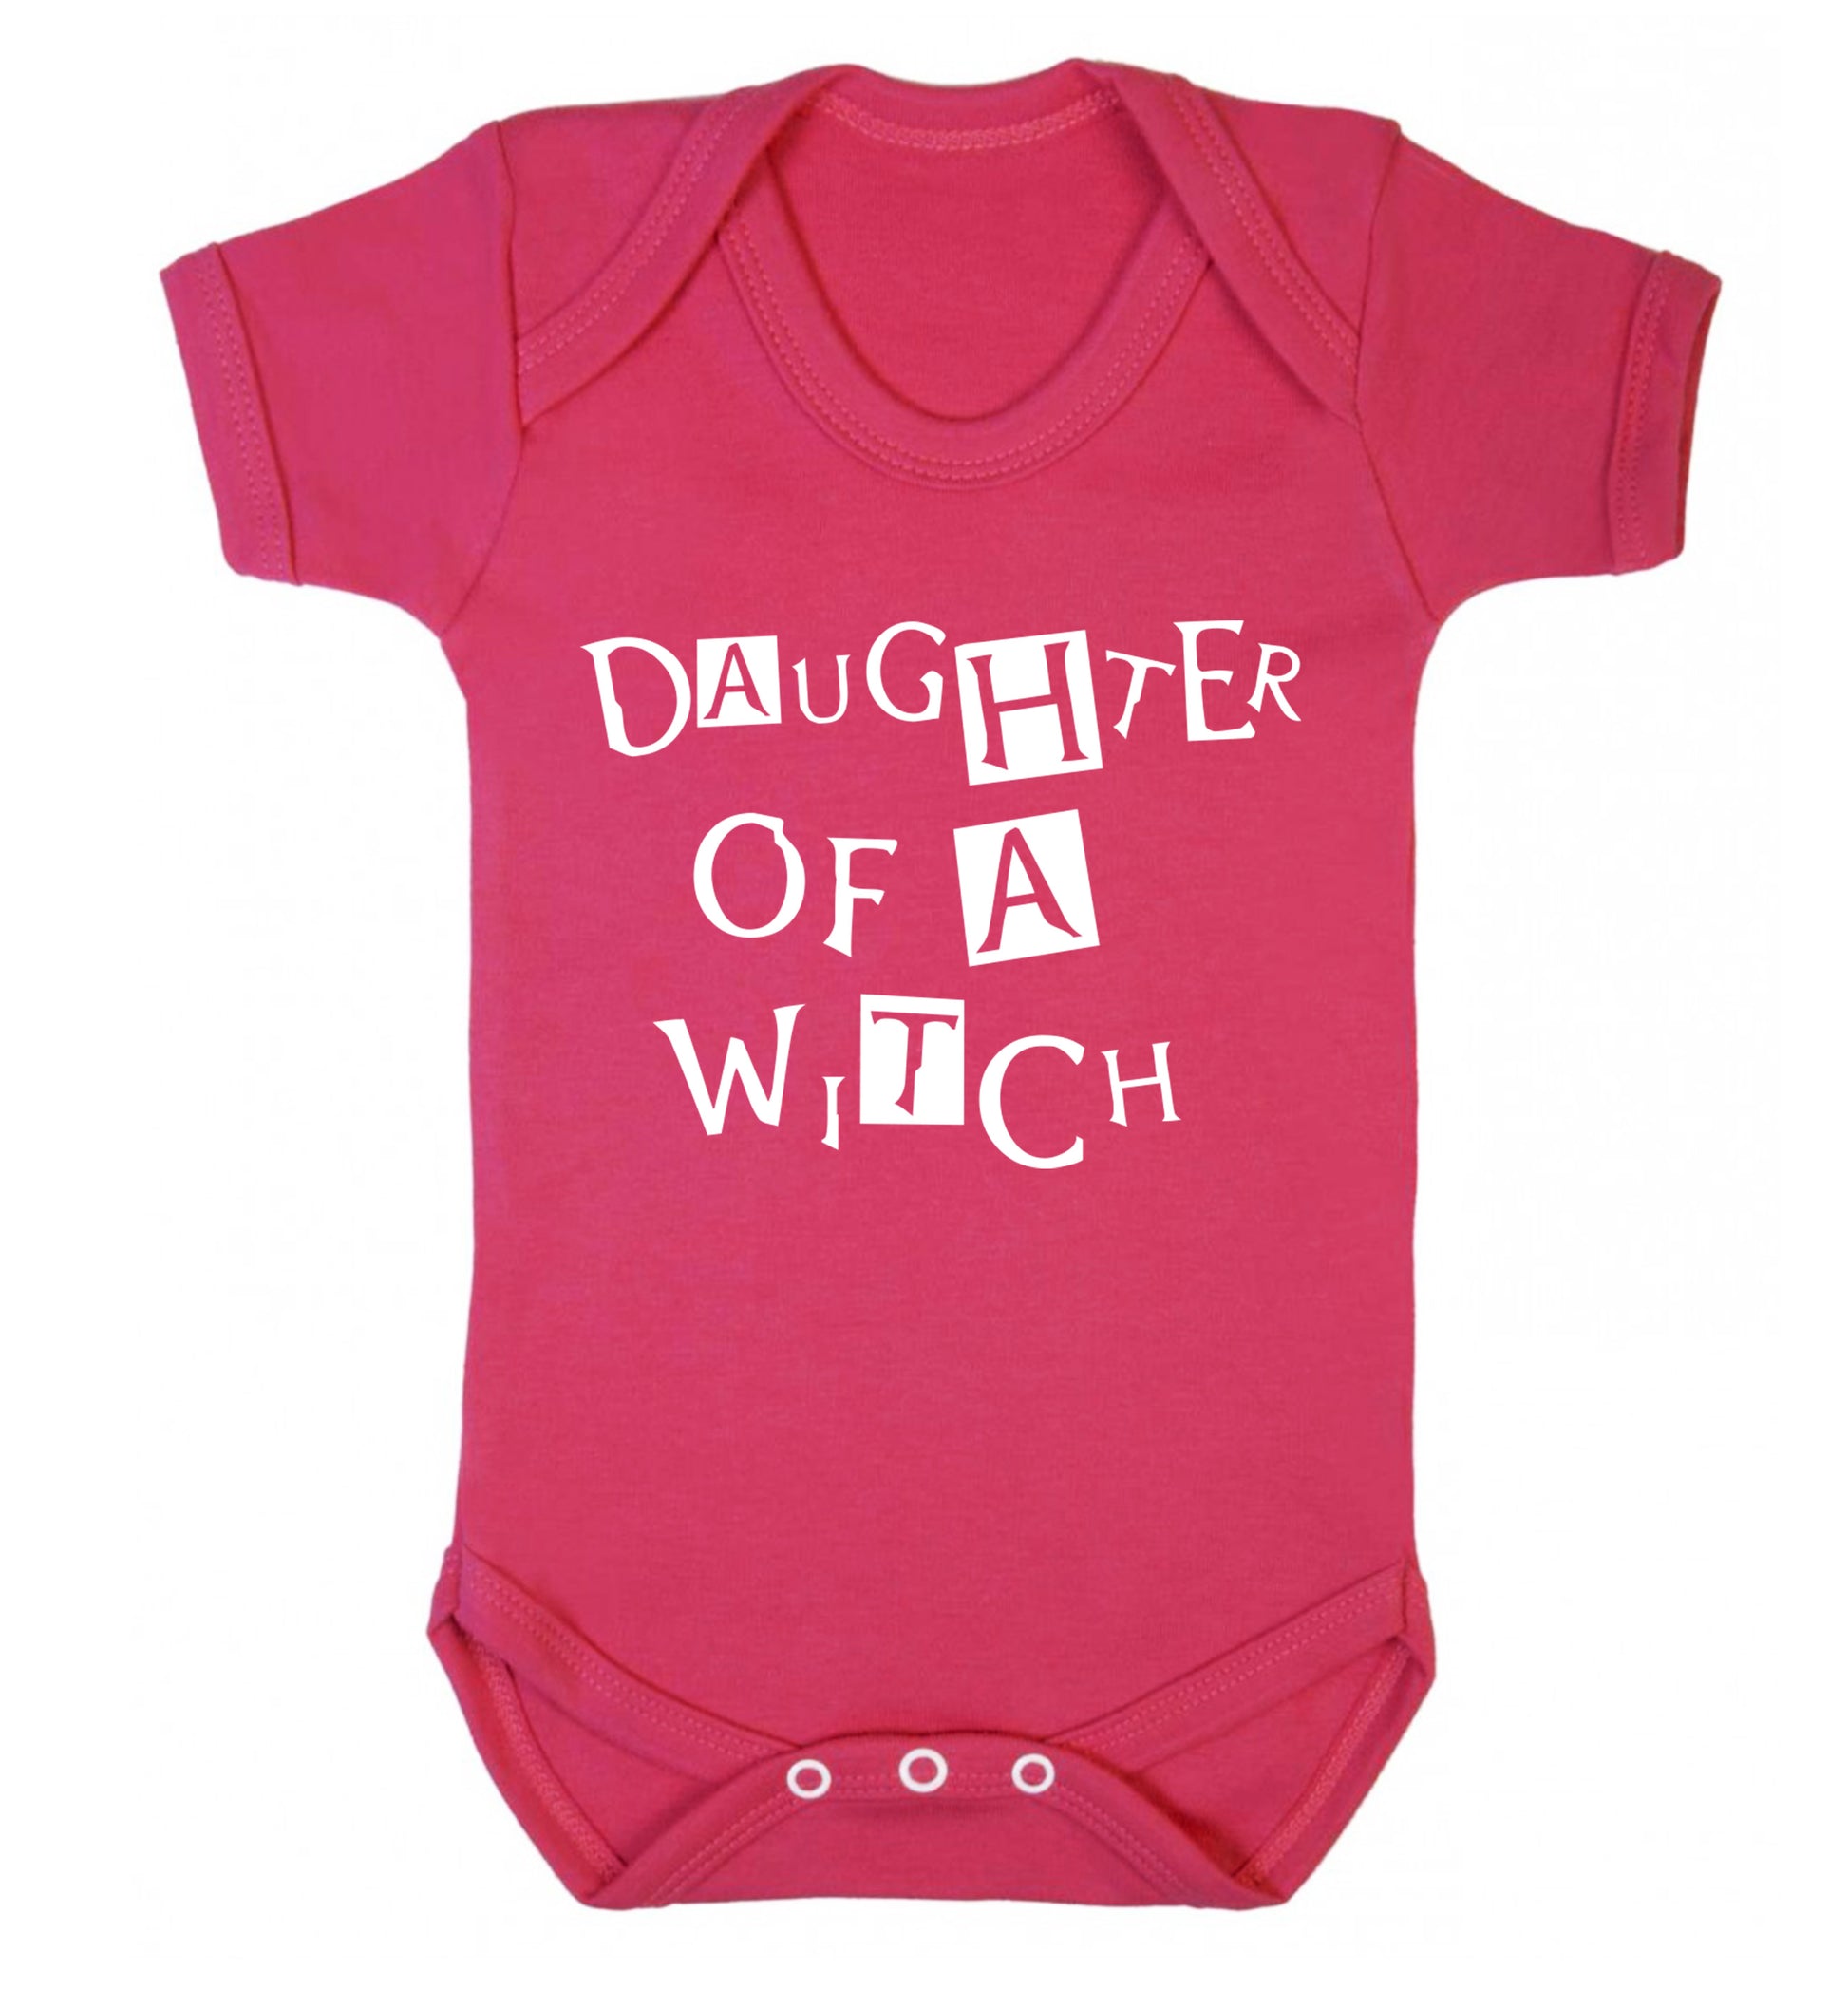 Daughter of a witch Baby Vest dark pink 18-24 months